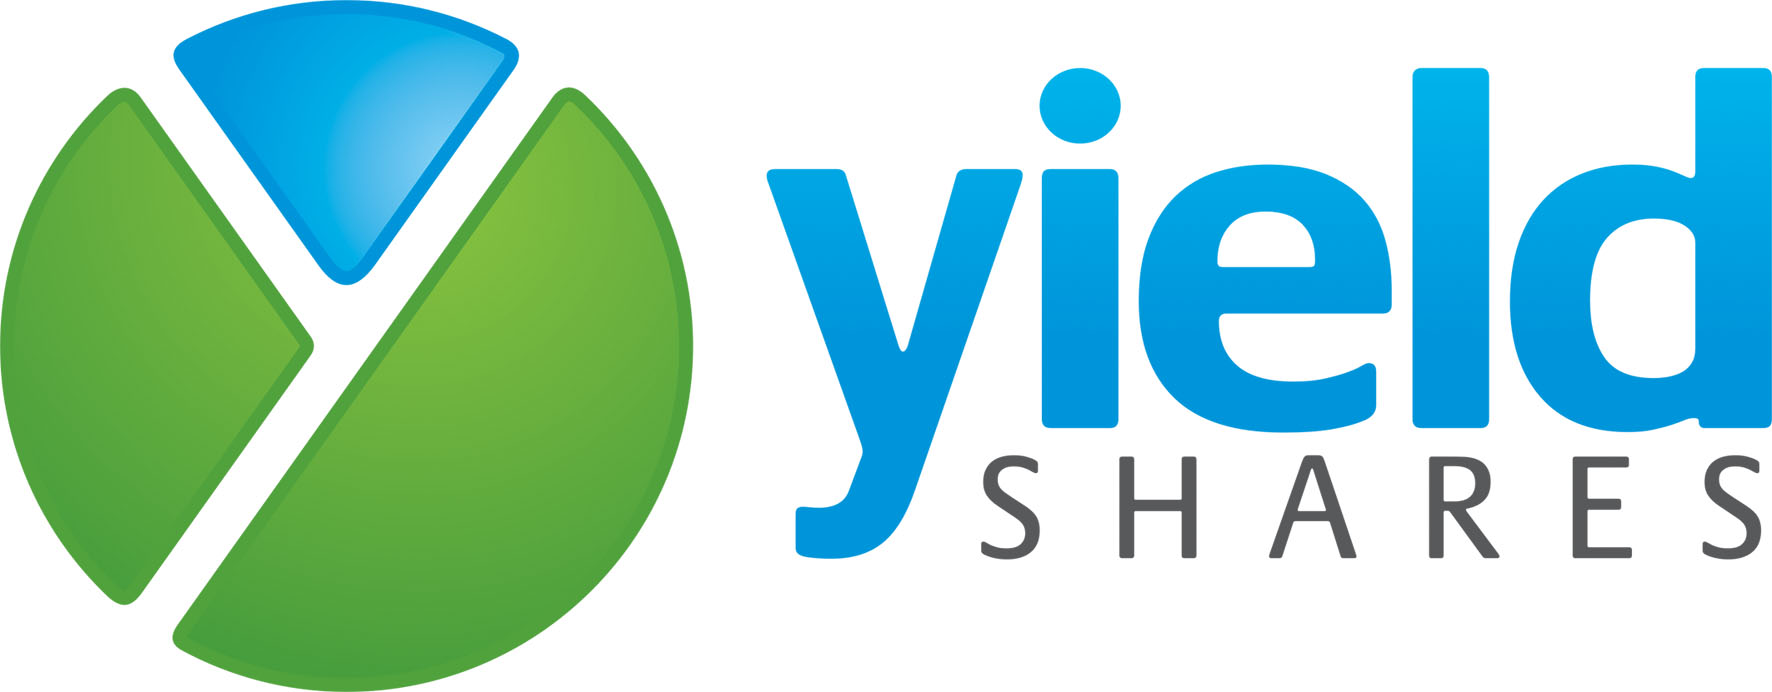 Sponsor of the YieldShares High Income ETF (YYY)